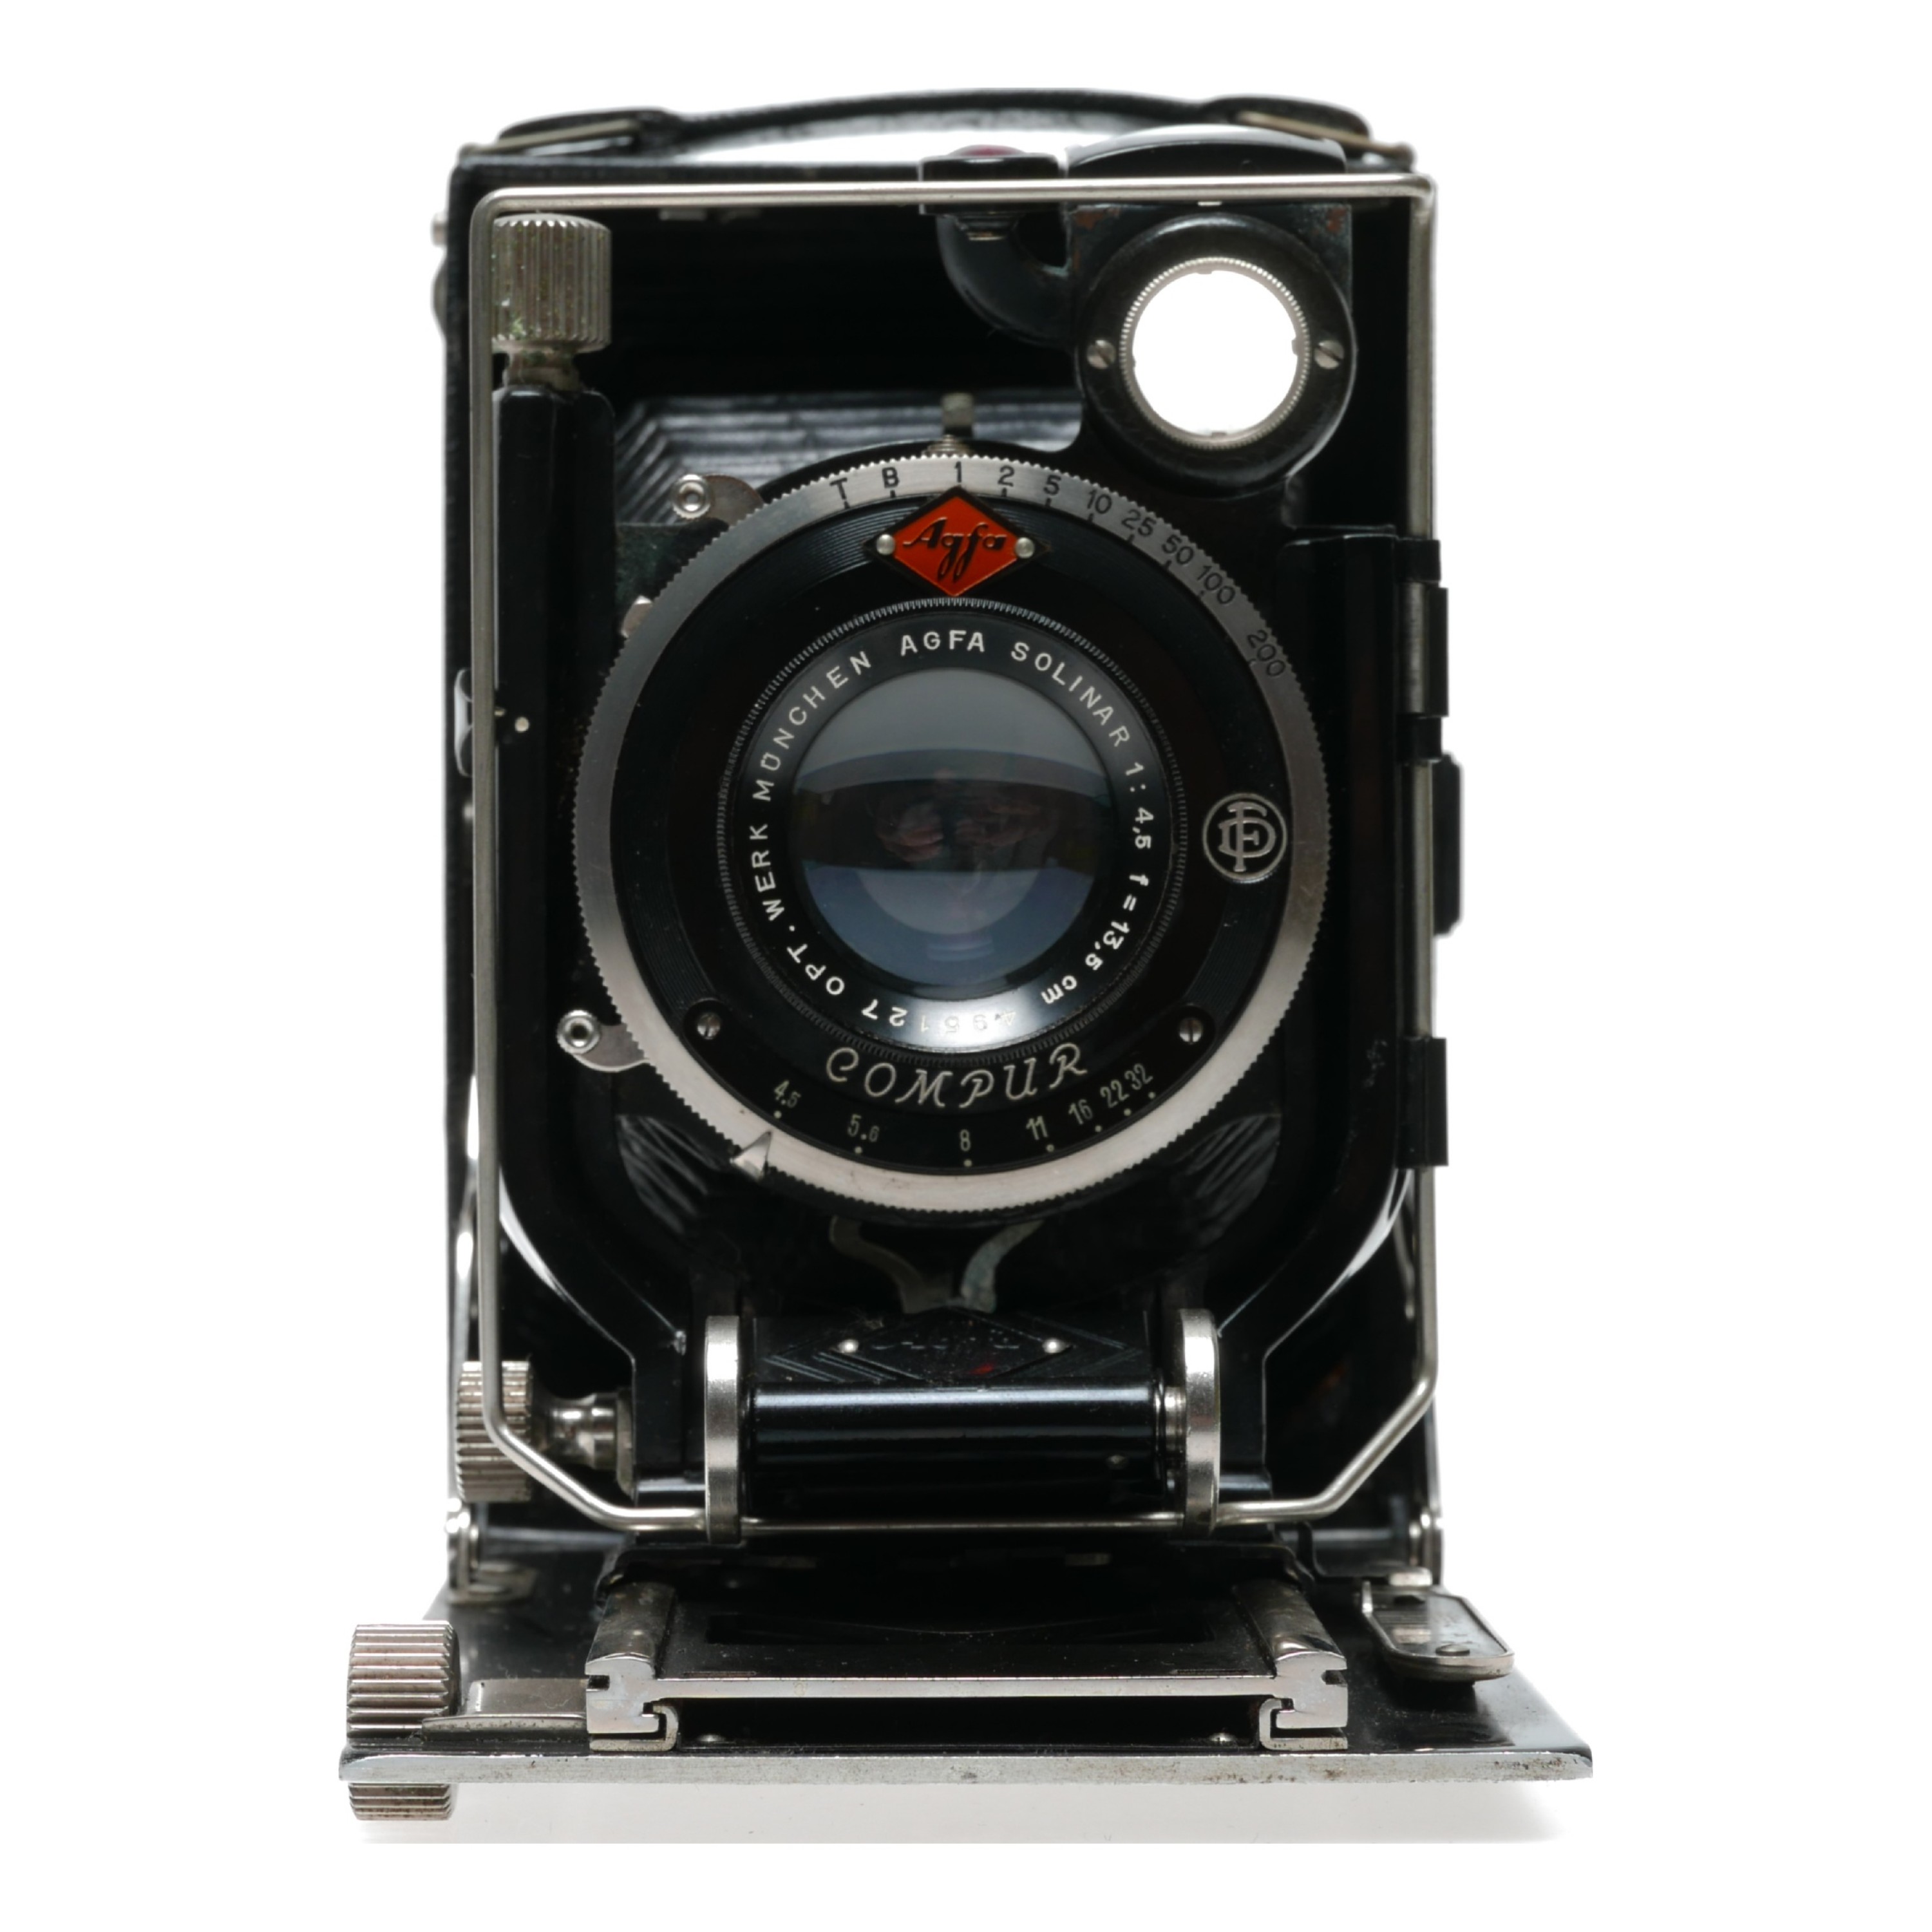 Agfa Isolar Folding 9x12 Plate Film Camera Solinar 1:4.5 fu003d13.5cm